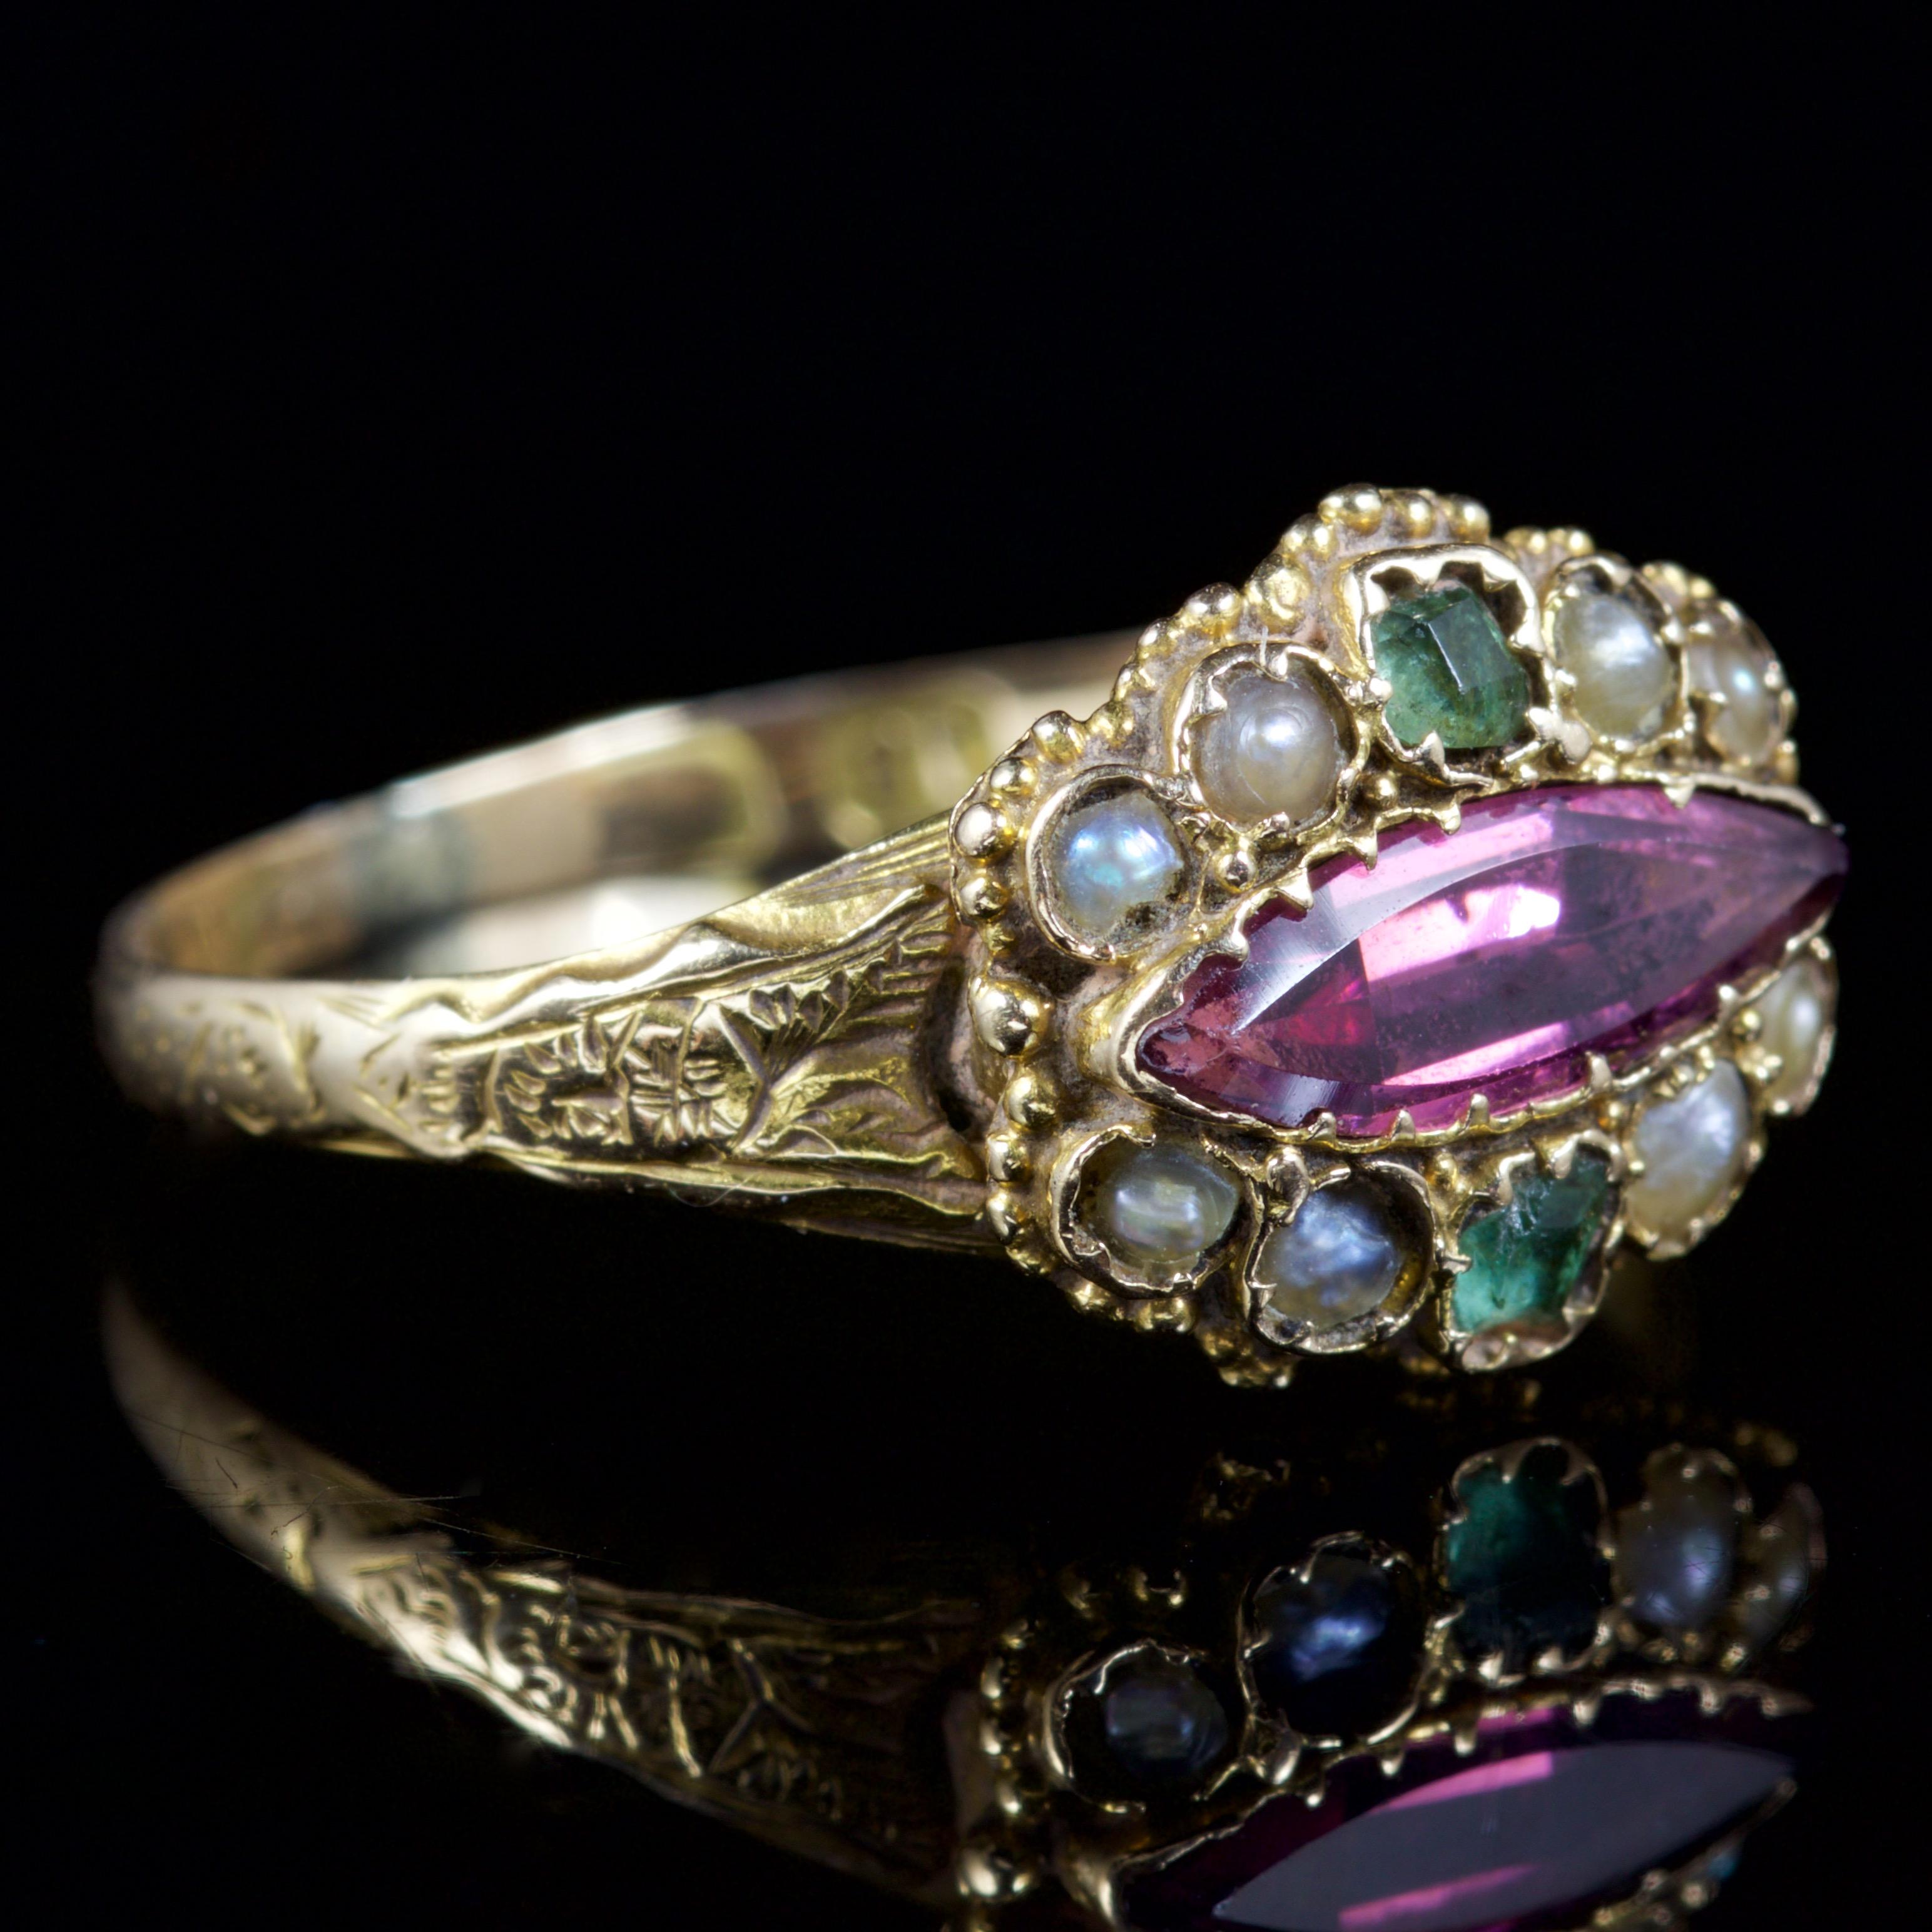 Women's Antique Victorian Suffragette Ring 15 Carat Gold, circa 1900